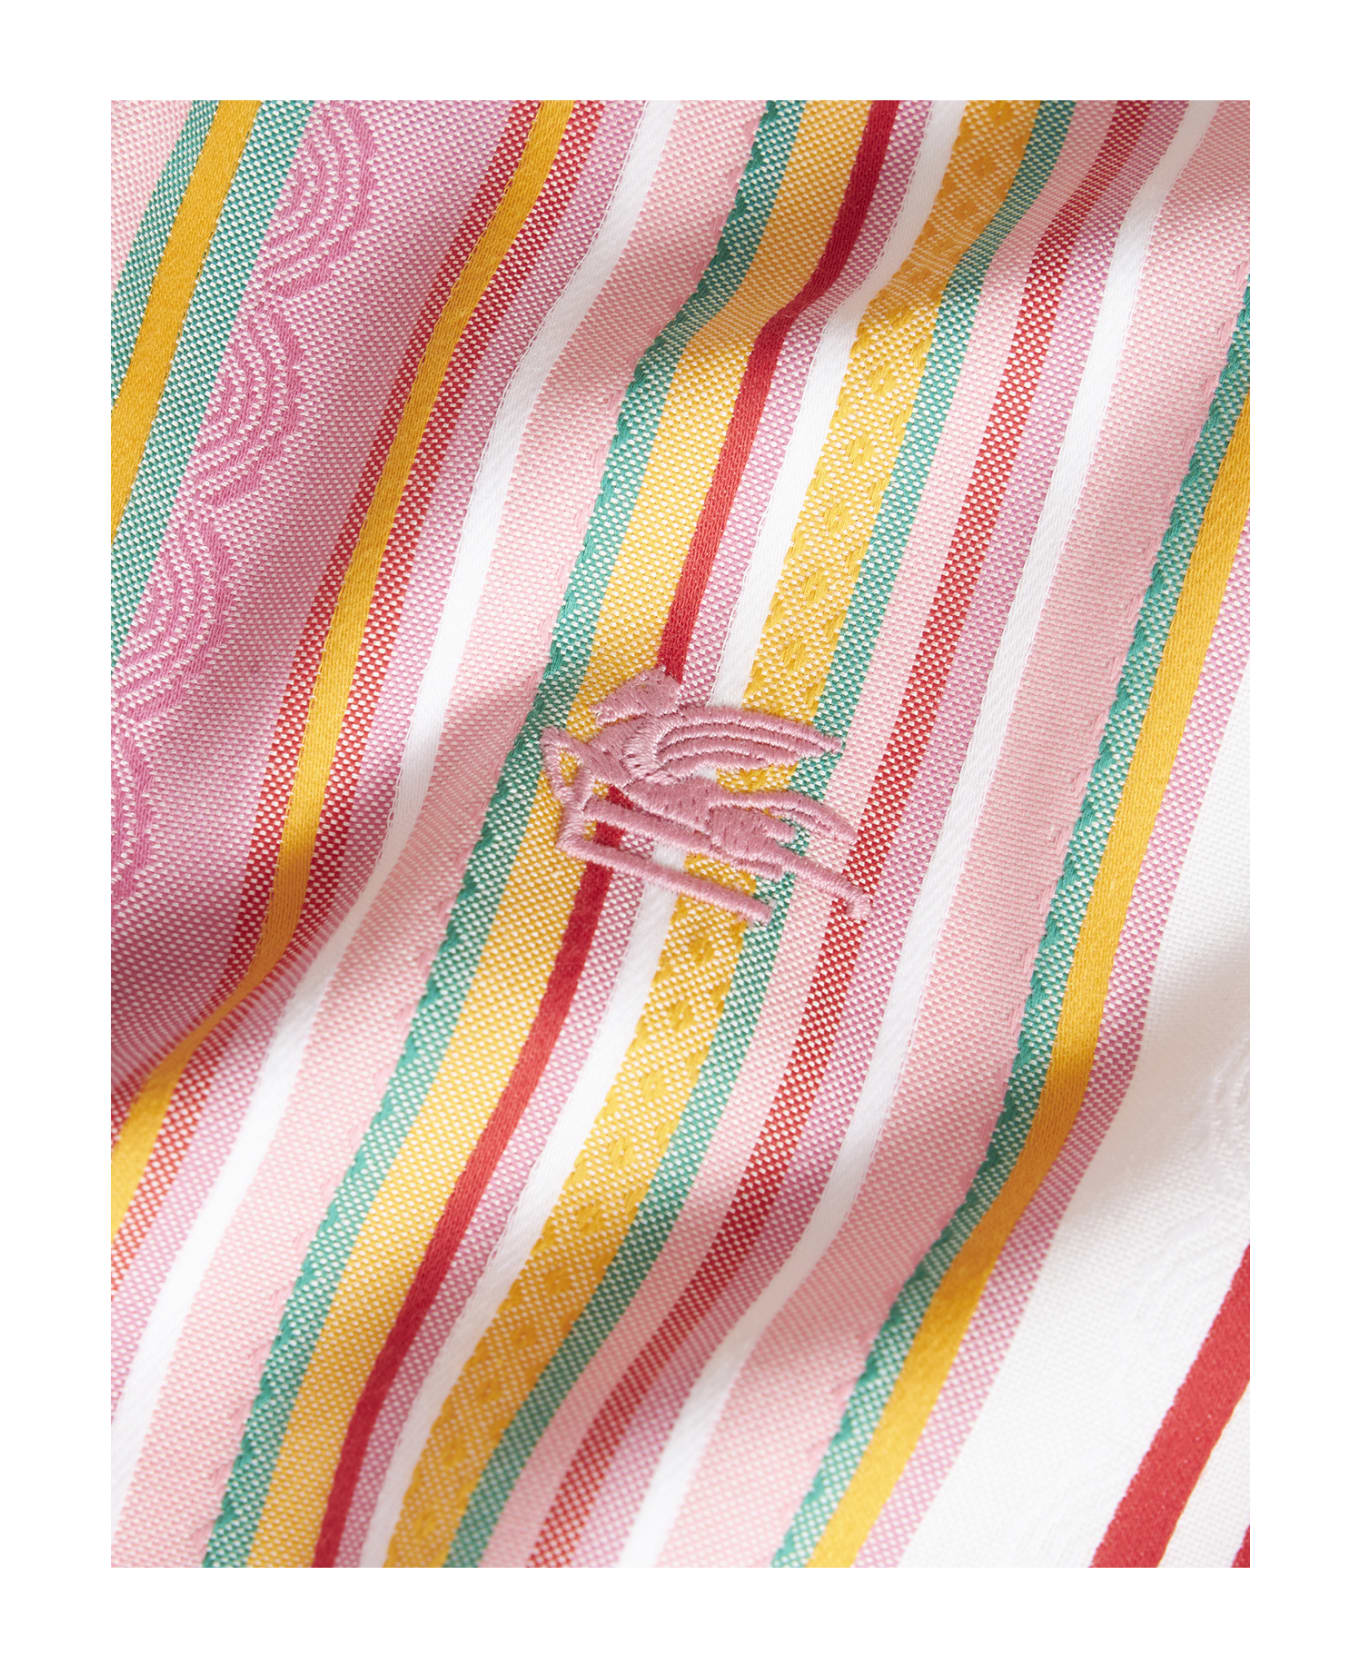 Etro Pink/multicolour Striped Cotton Shirt - Pink シャツ